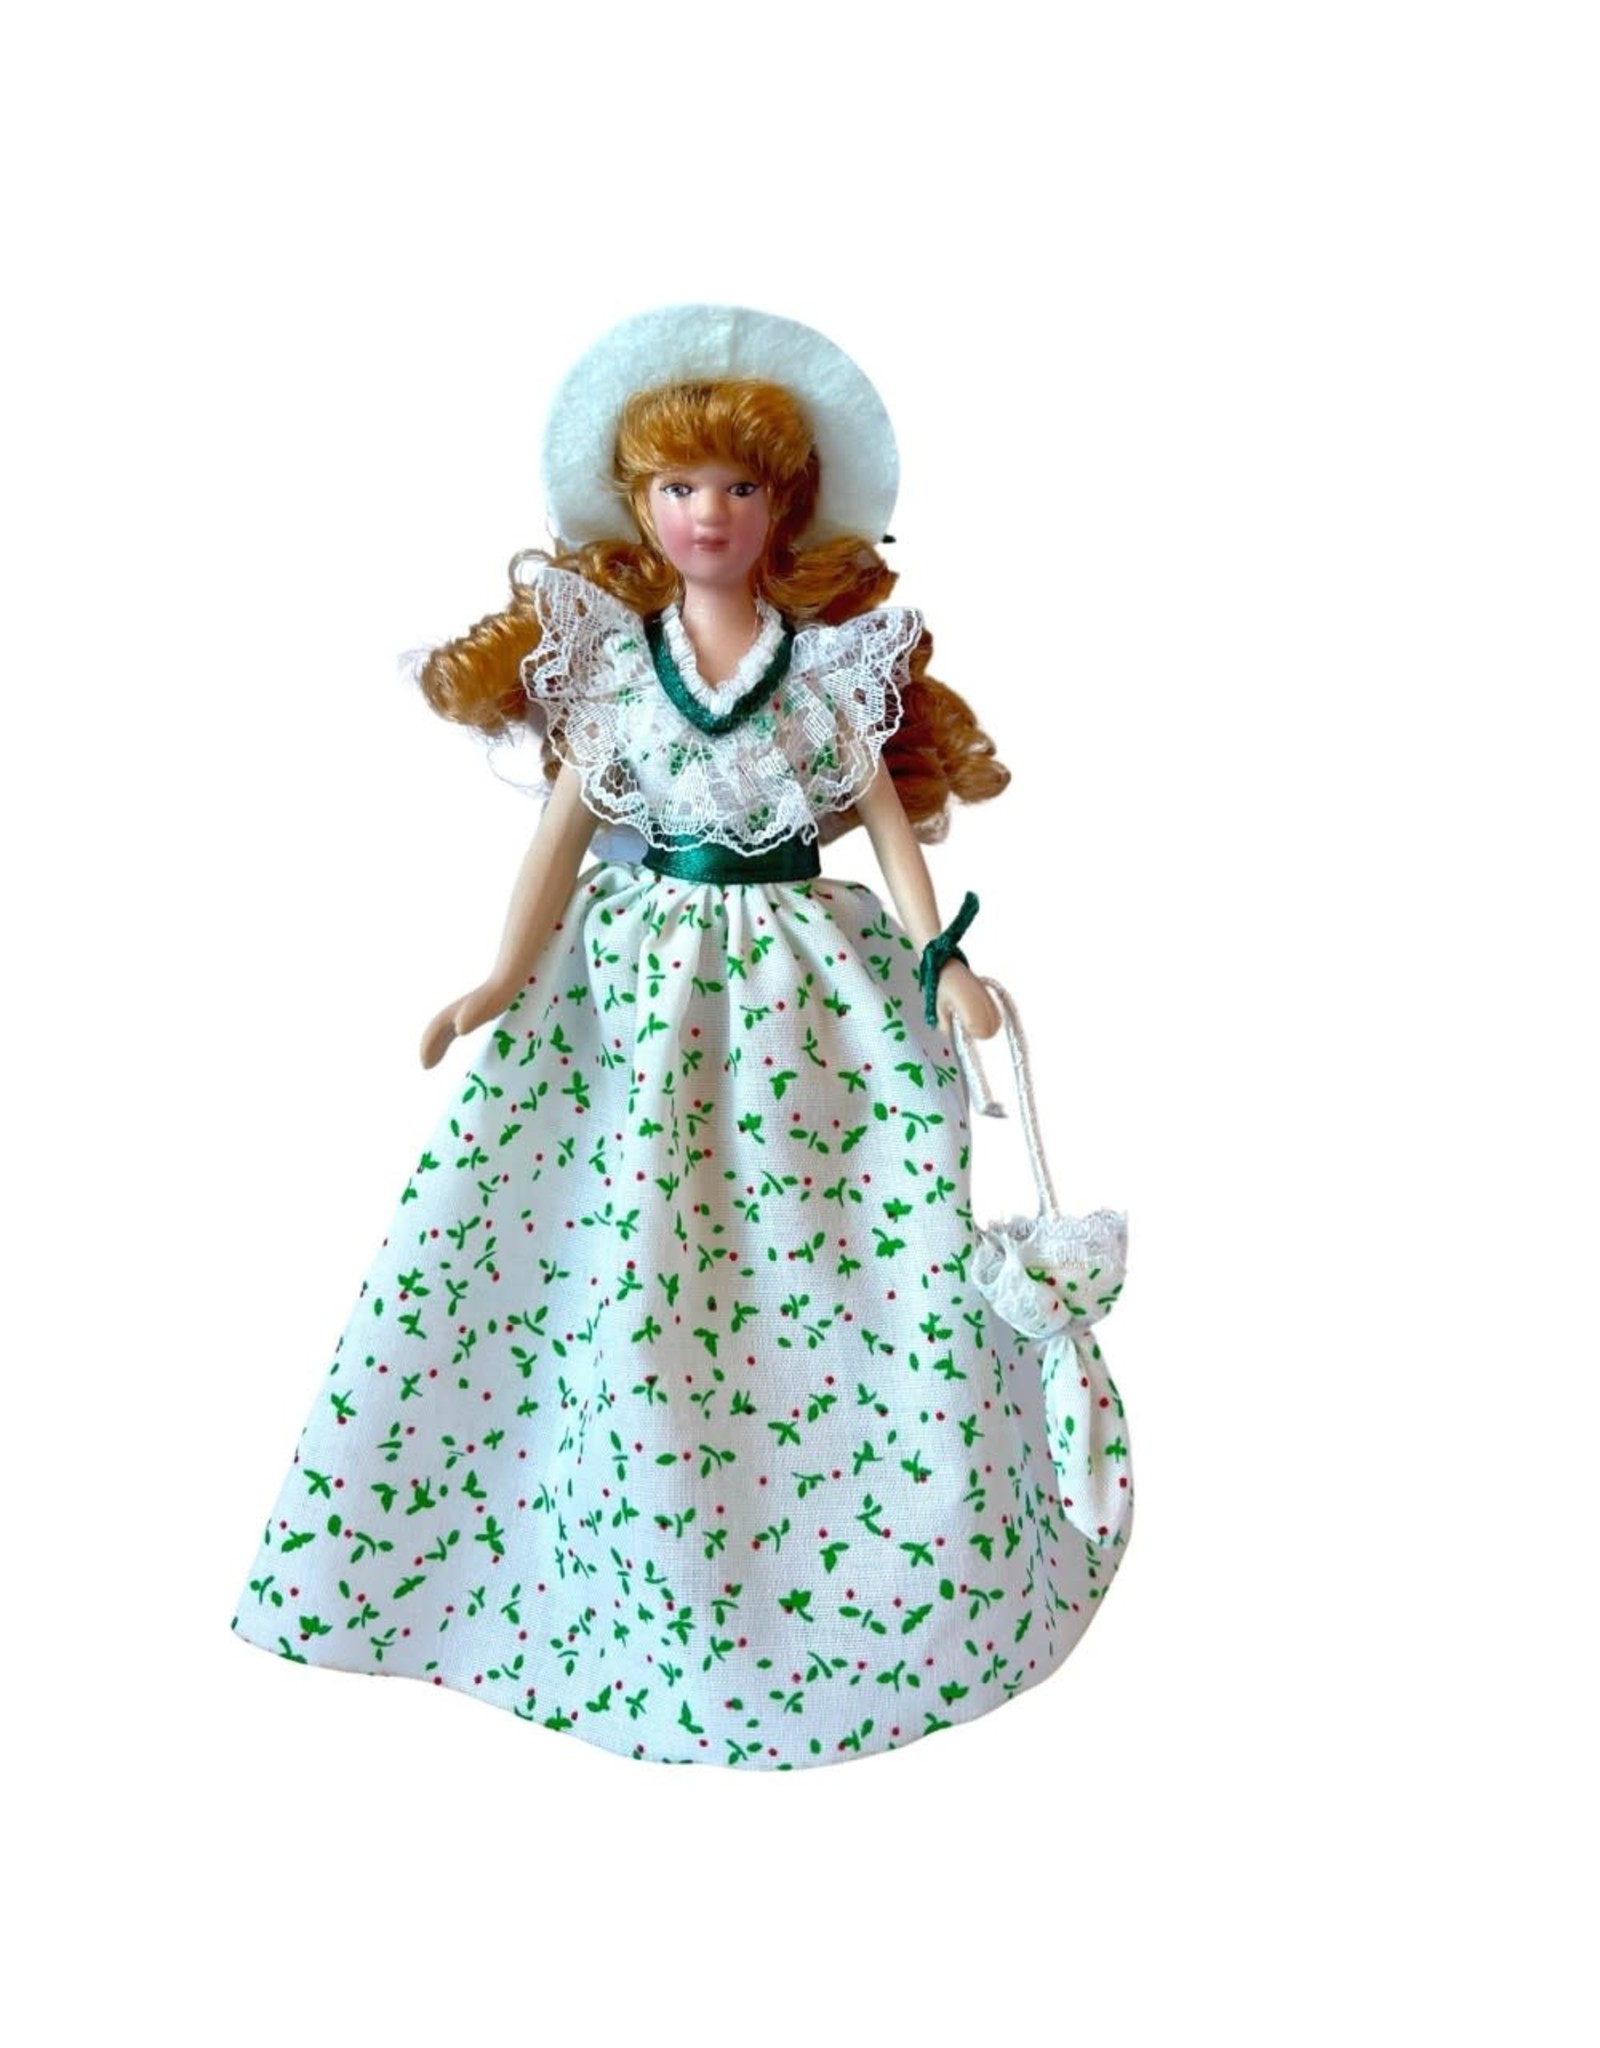 Femme, robe à motifs verts miniature 1:12